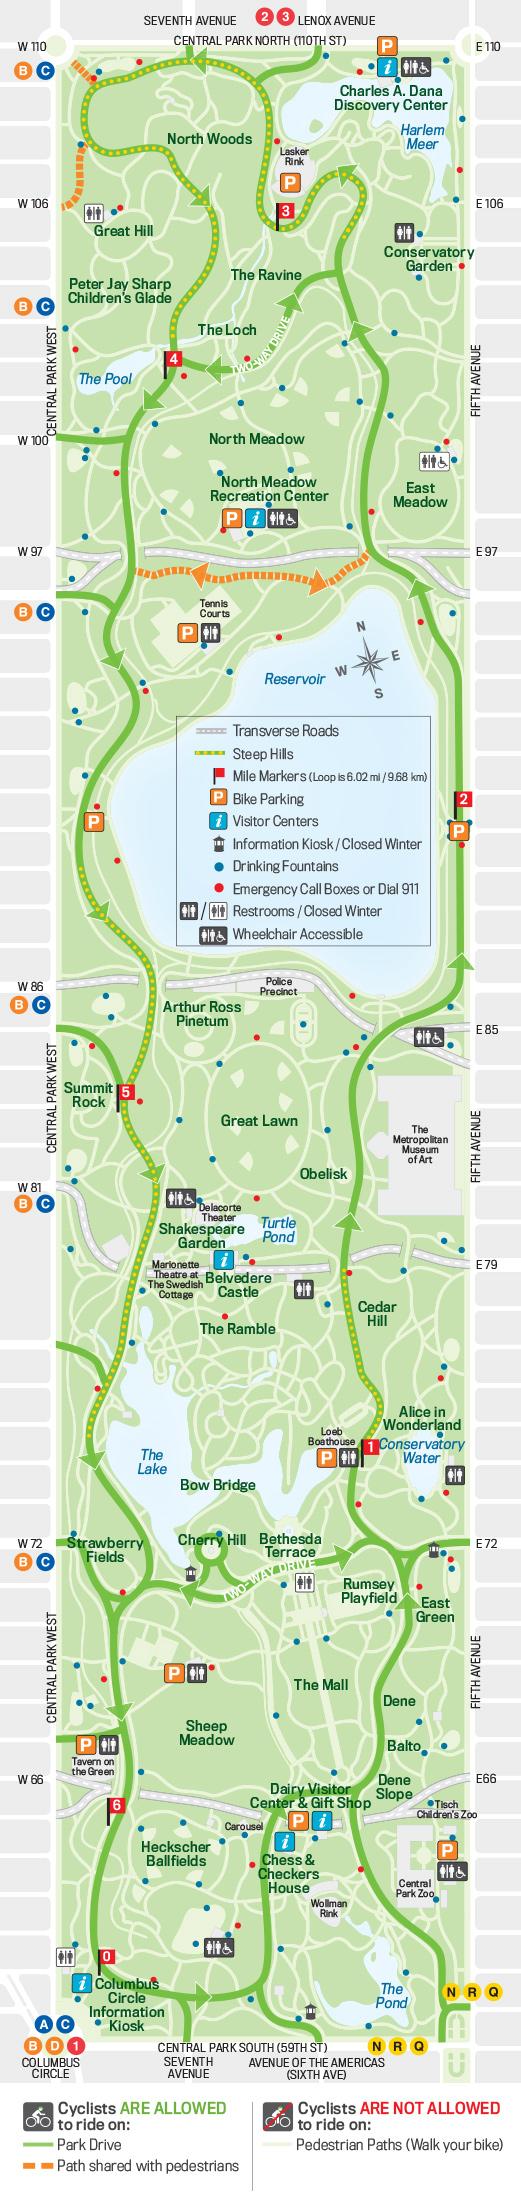 Central park bike map - Bike map of central park (New York - USA)